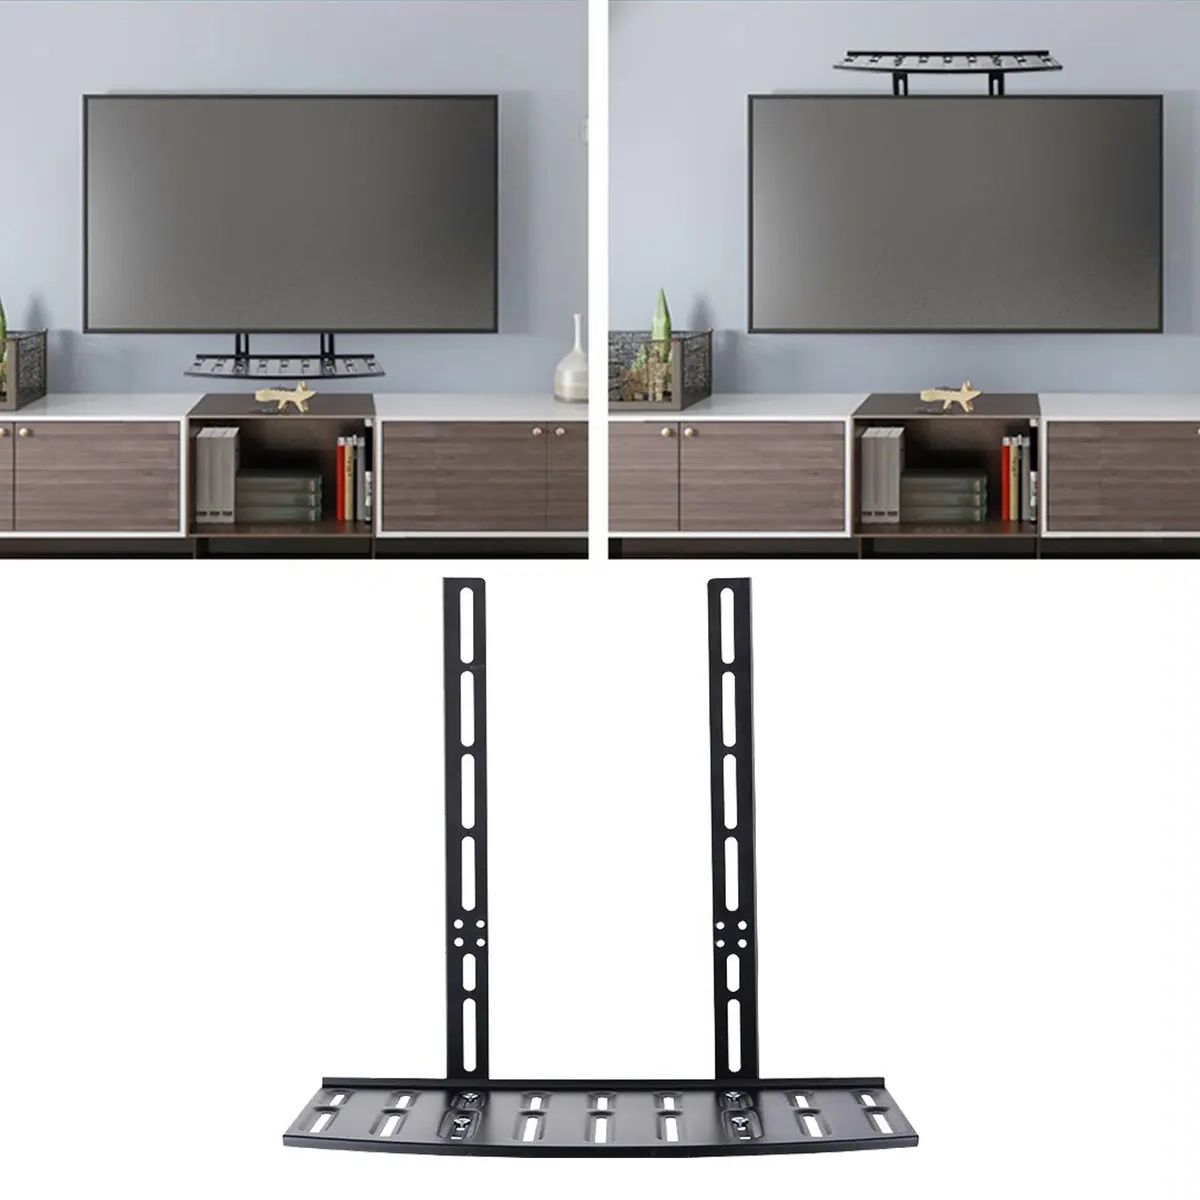 Tv Wall Mount Shelf Bracket Adjustable Monitor Top Shelf For Media Boxes |  Ebay Intended For Top Shelf Mount Tv Stands (Gallery 1 of 20)